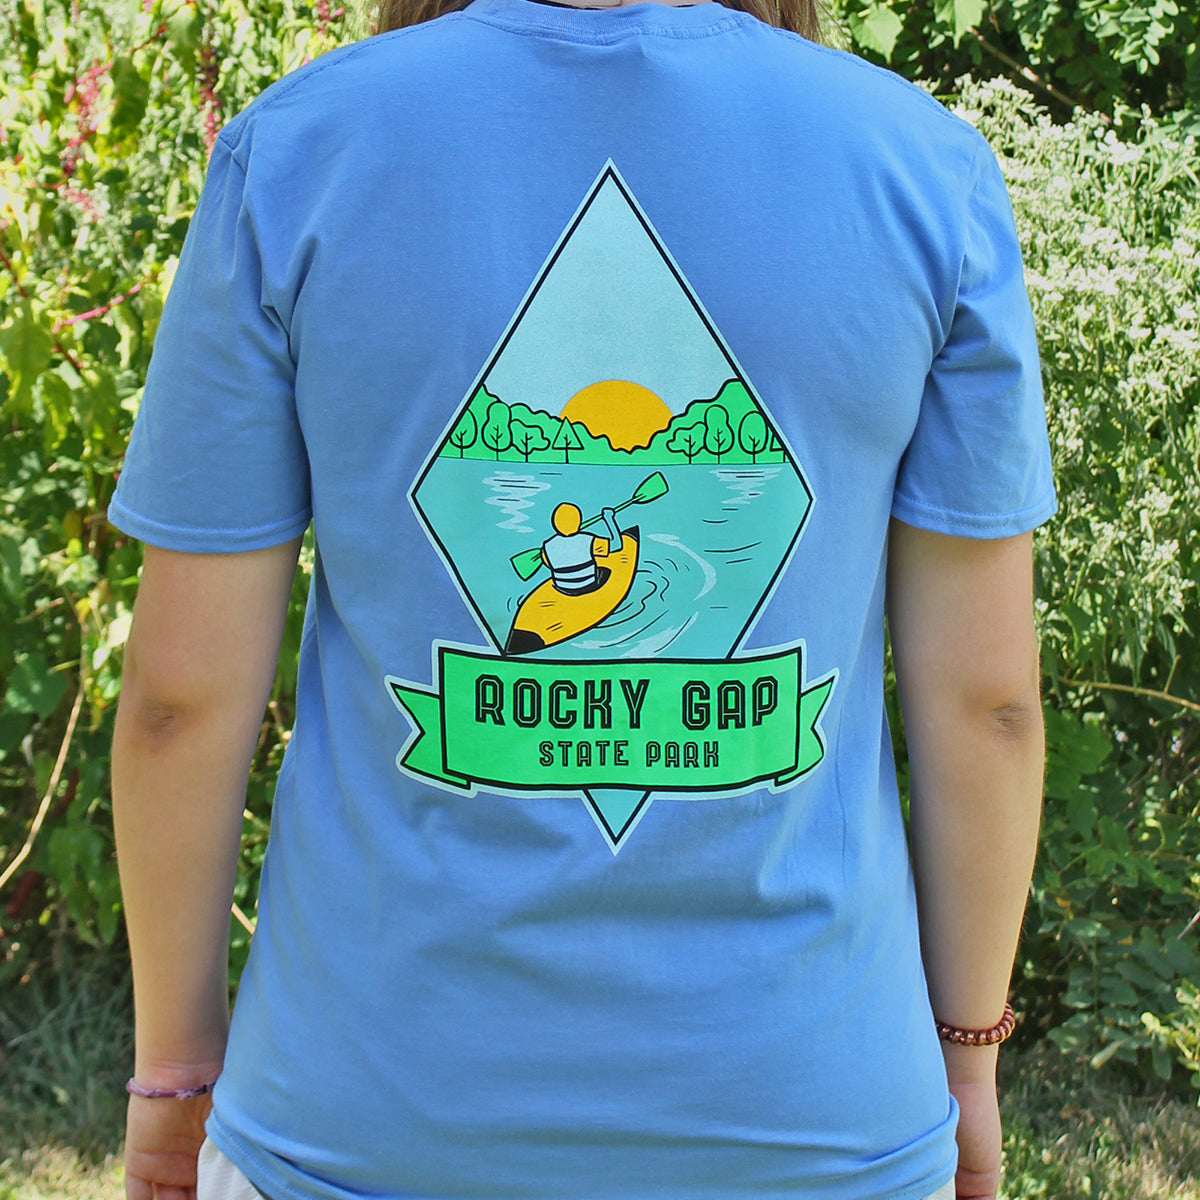 Rocky Gap State Park (Iris) / Shirt - Route One Apparel